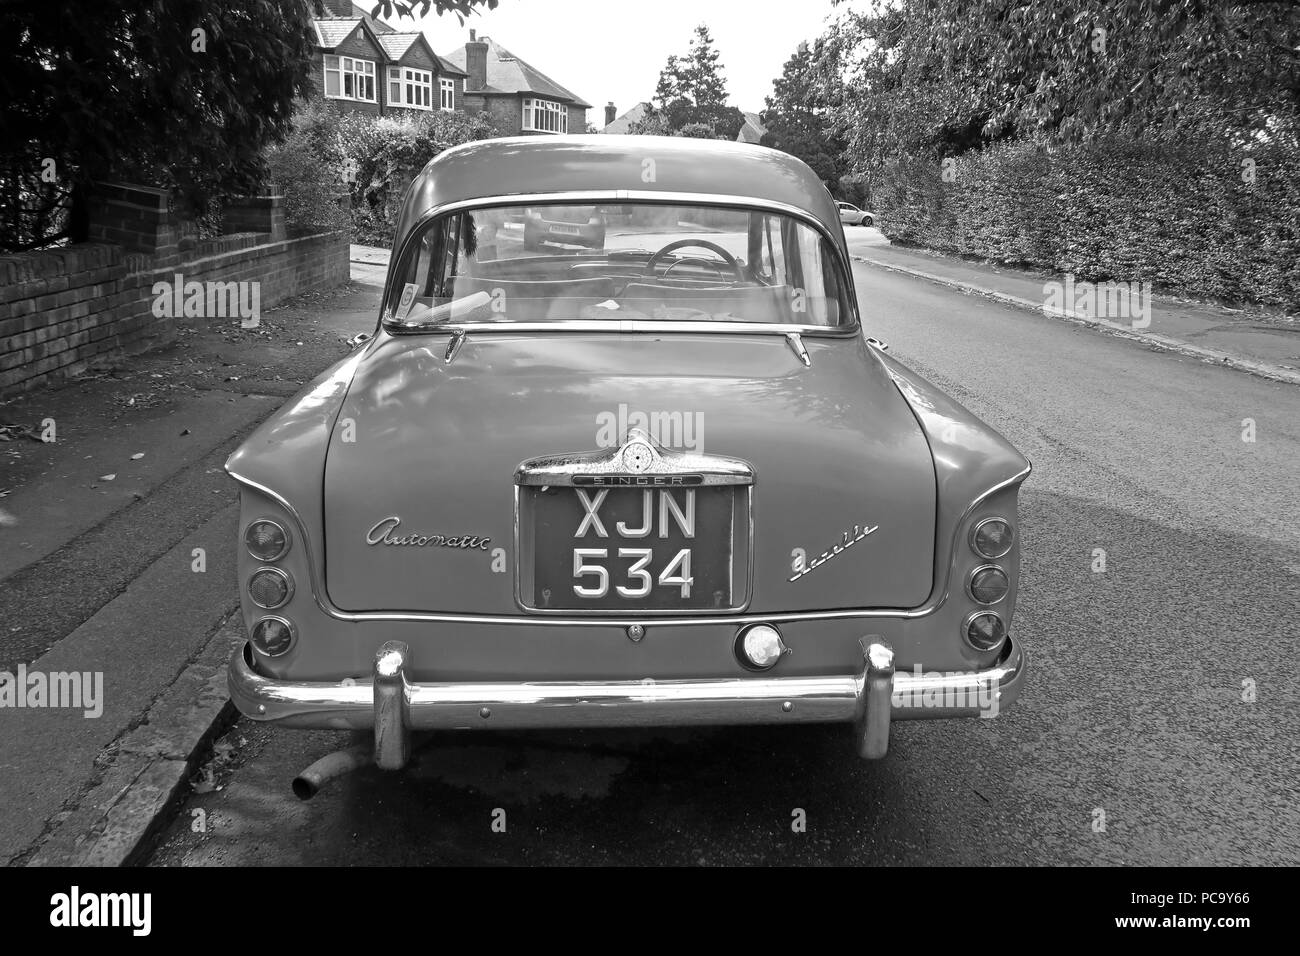 Singer Gazelle classic car, blue, XJN534, in the street, Stockton Heath, Warrington, Cheshire, North West England, UK Stock Photo